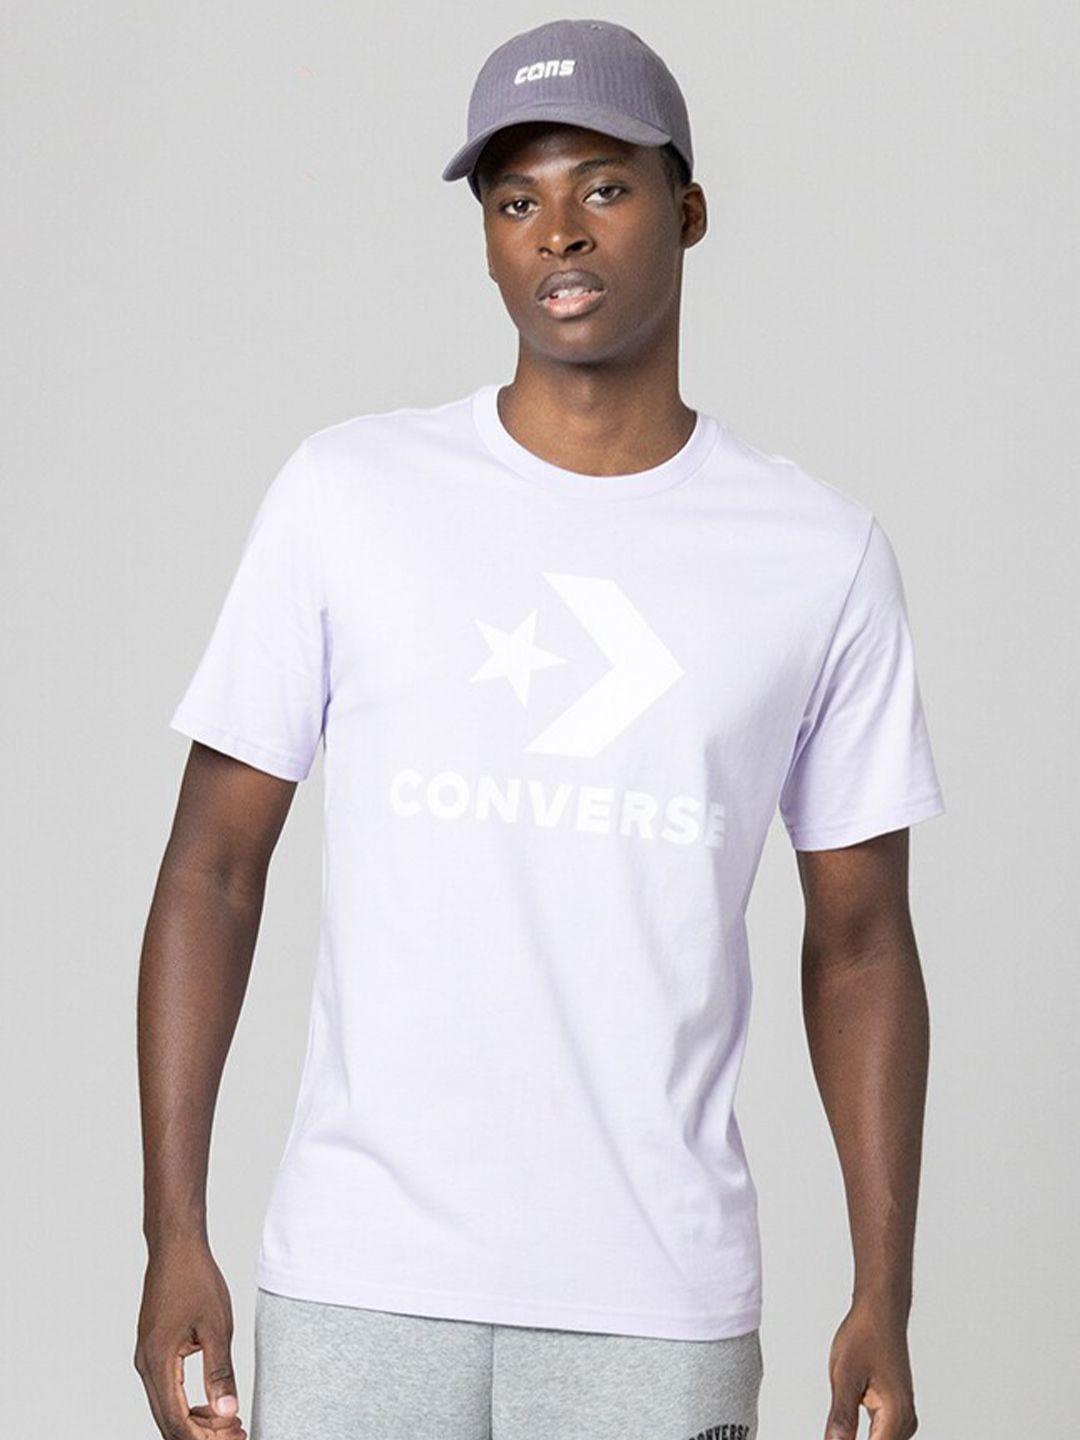 converse brand logo printed cotton t-shirt